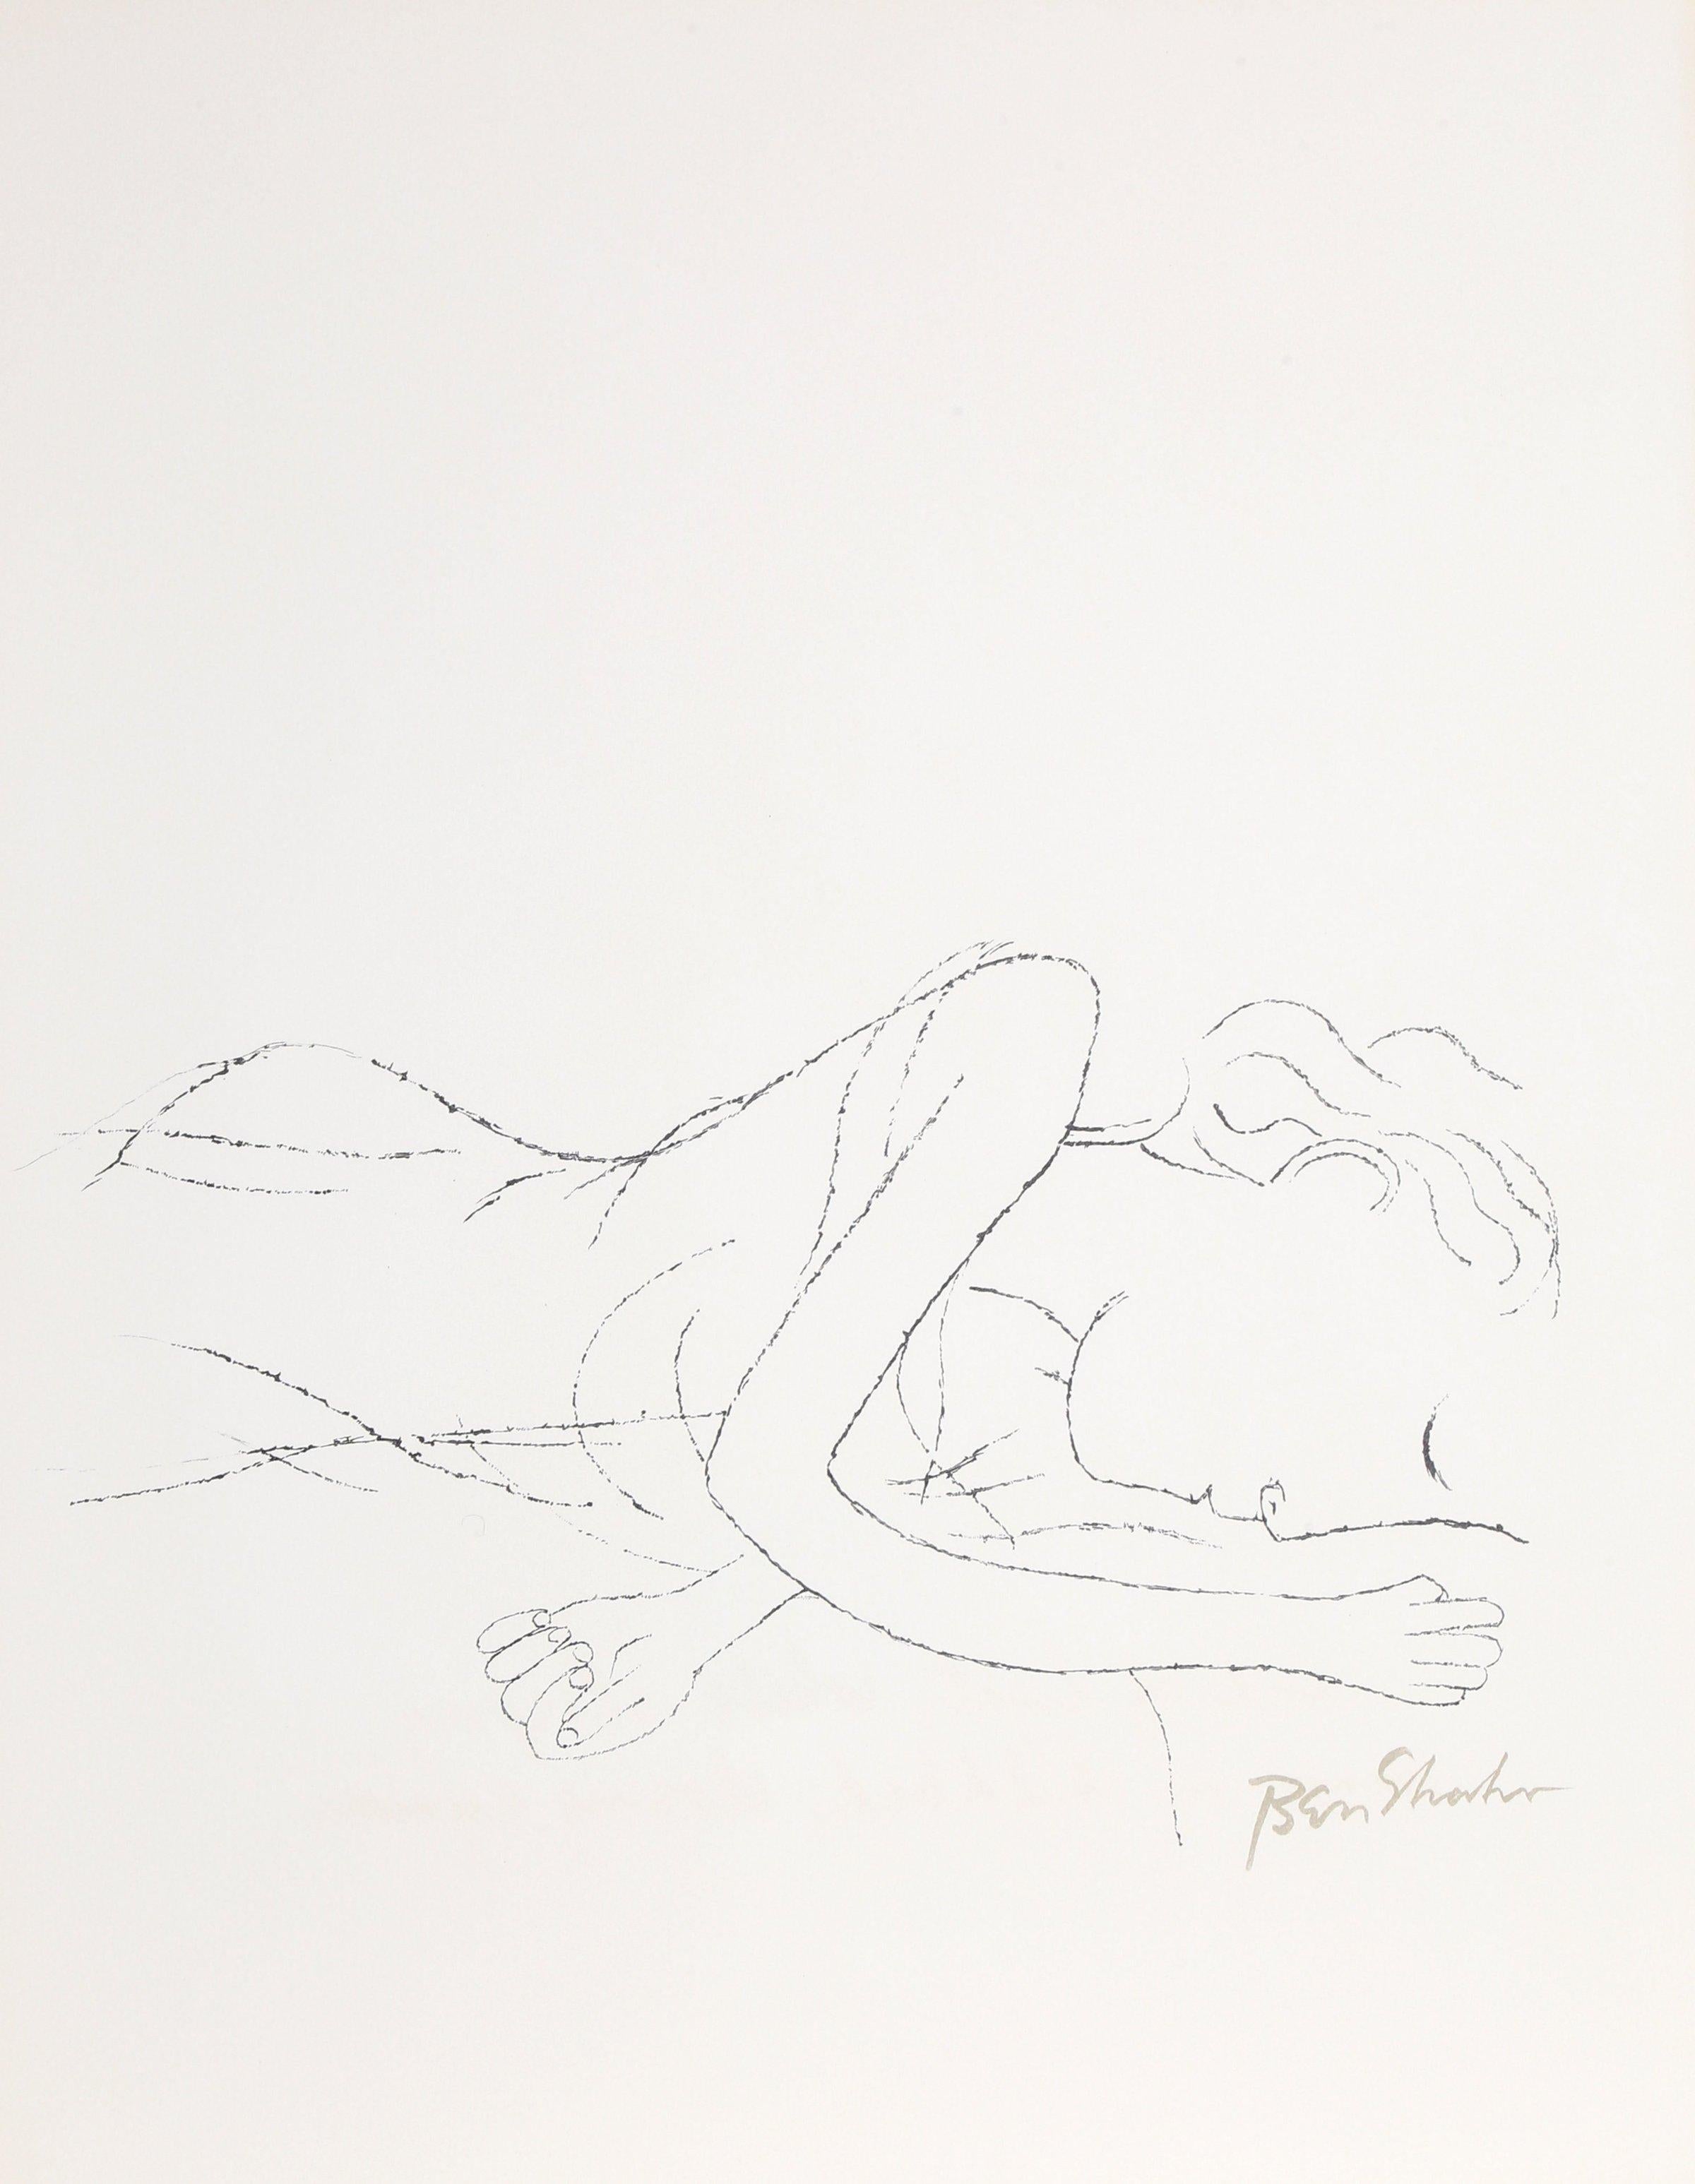 Ben Shahn Portrait Print – Of Light, White Sleeping Women in Childbed aus dem Rilke-Portfolio